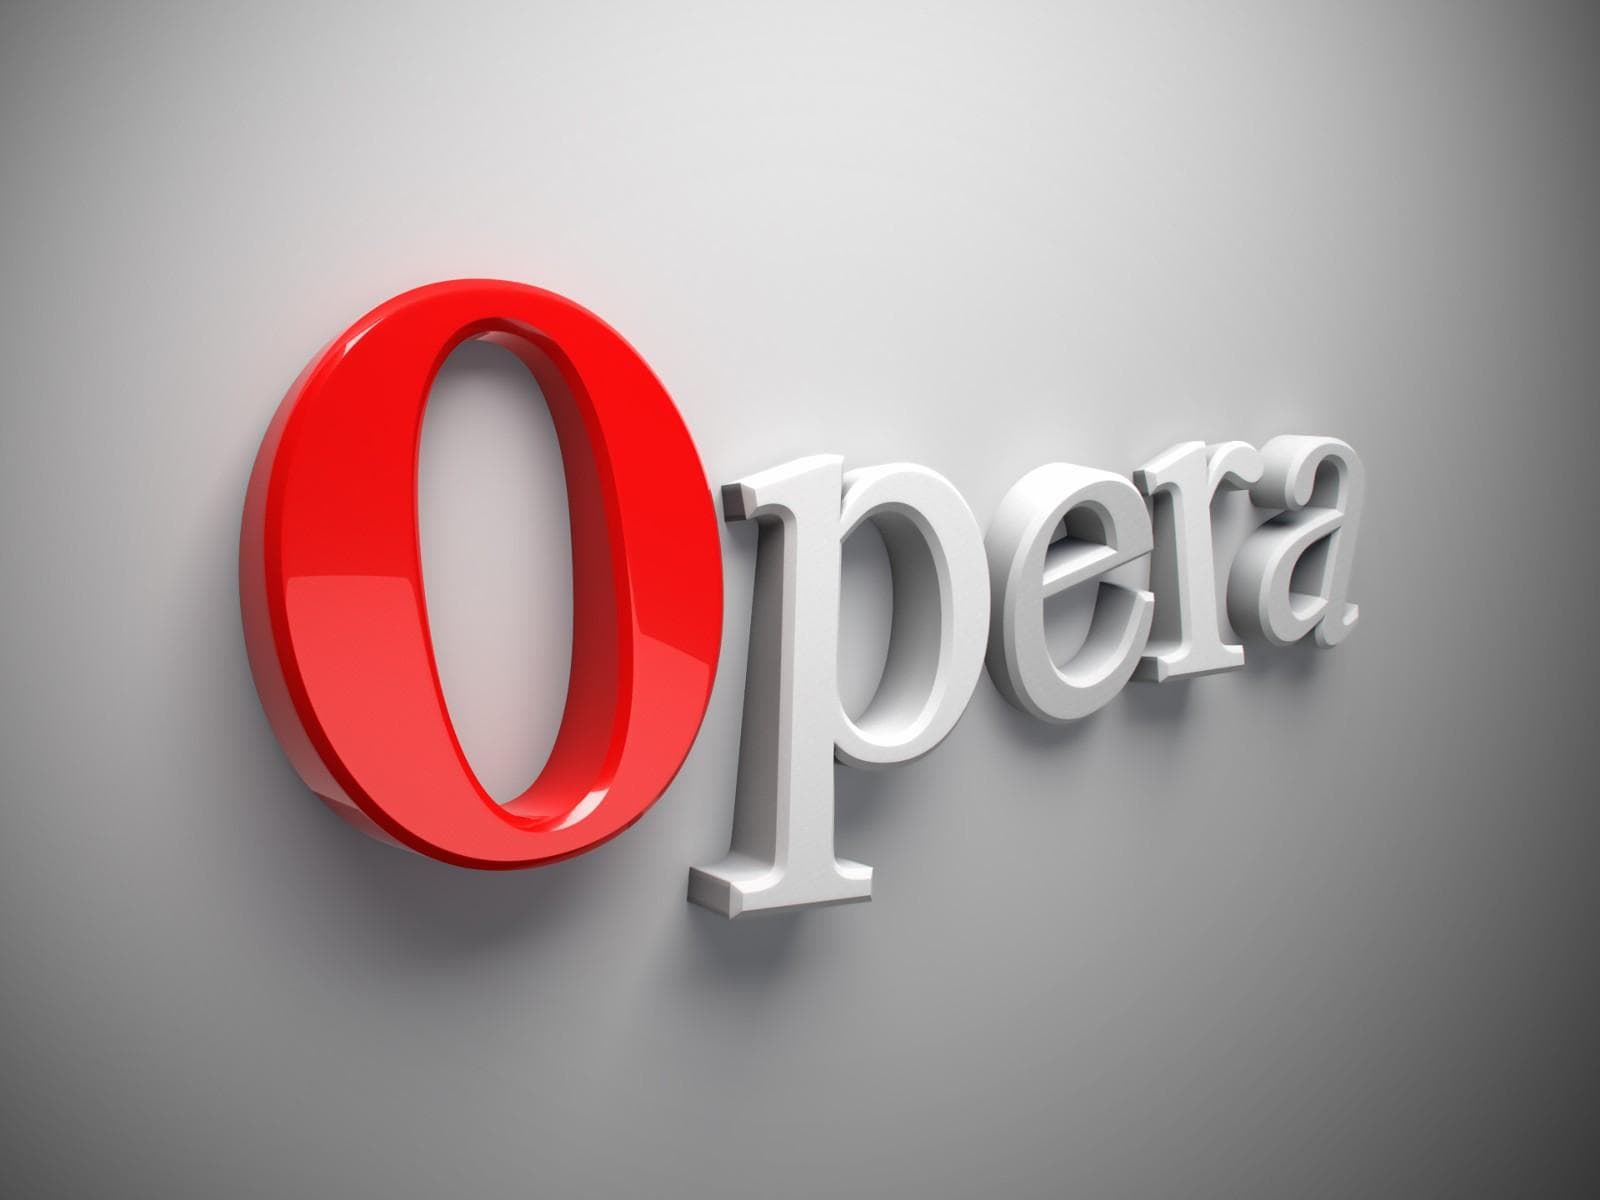 Browser Opera